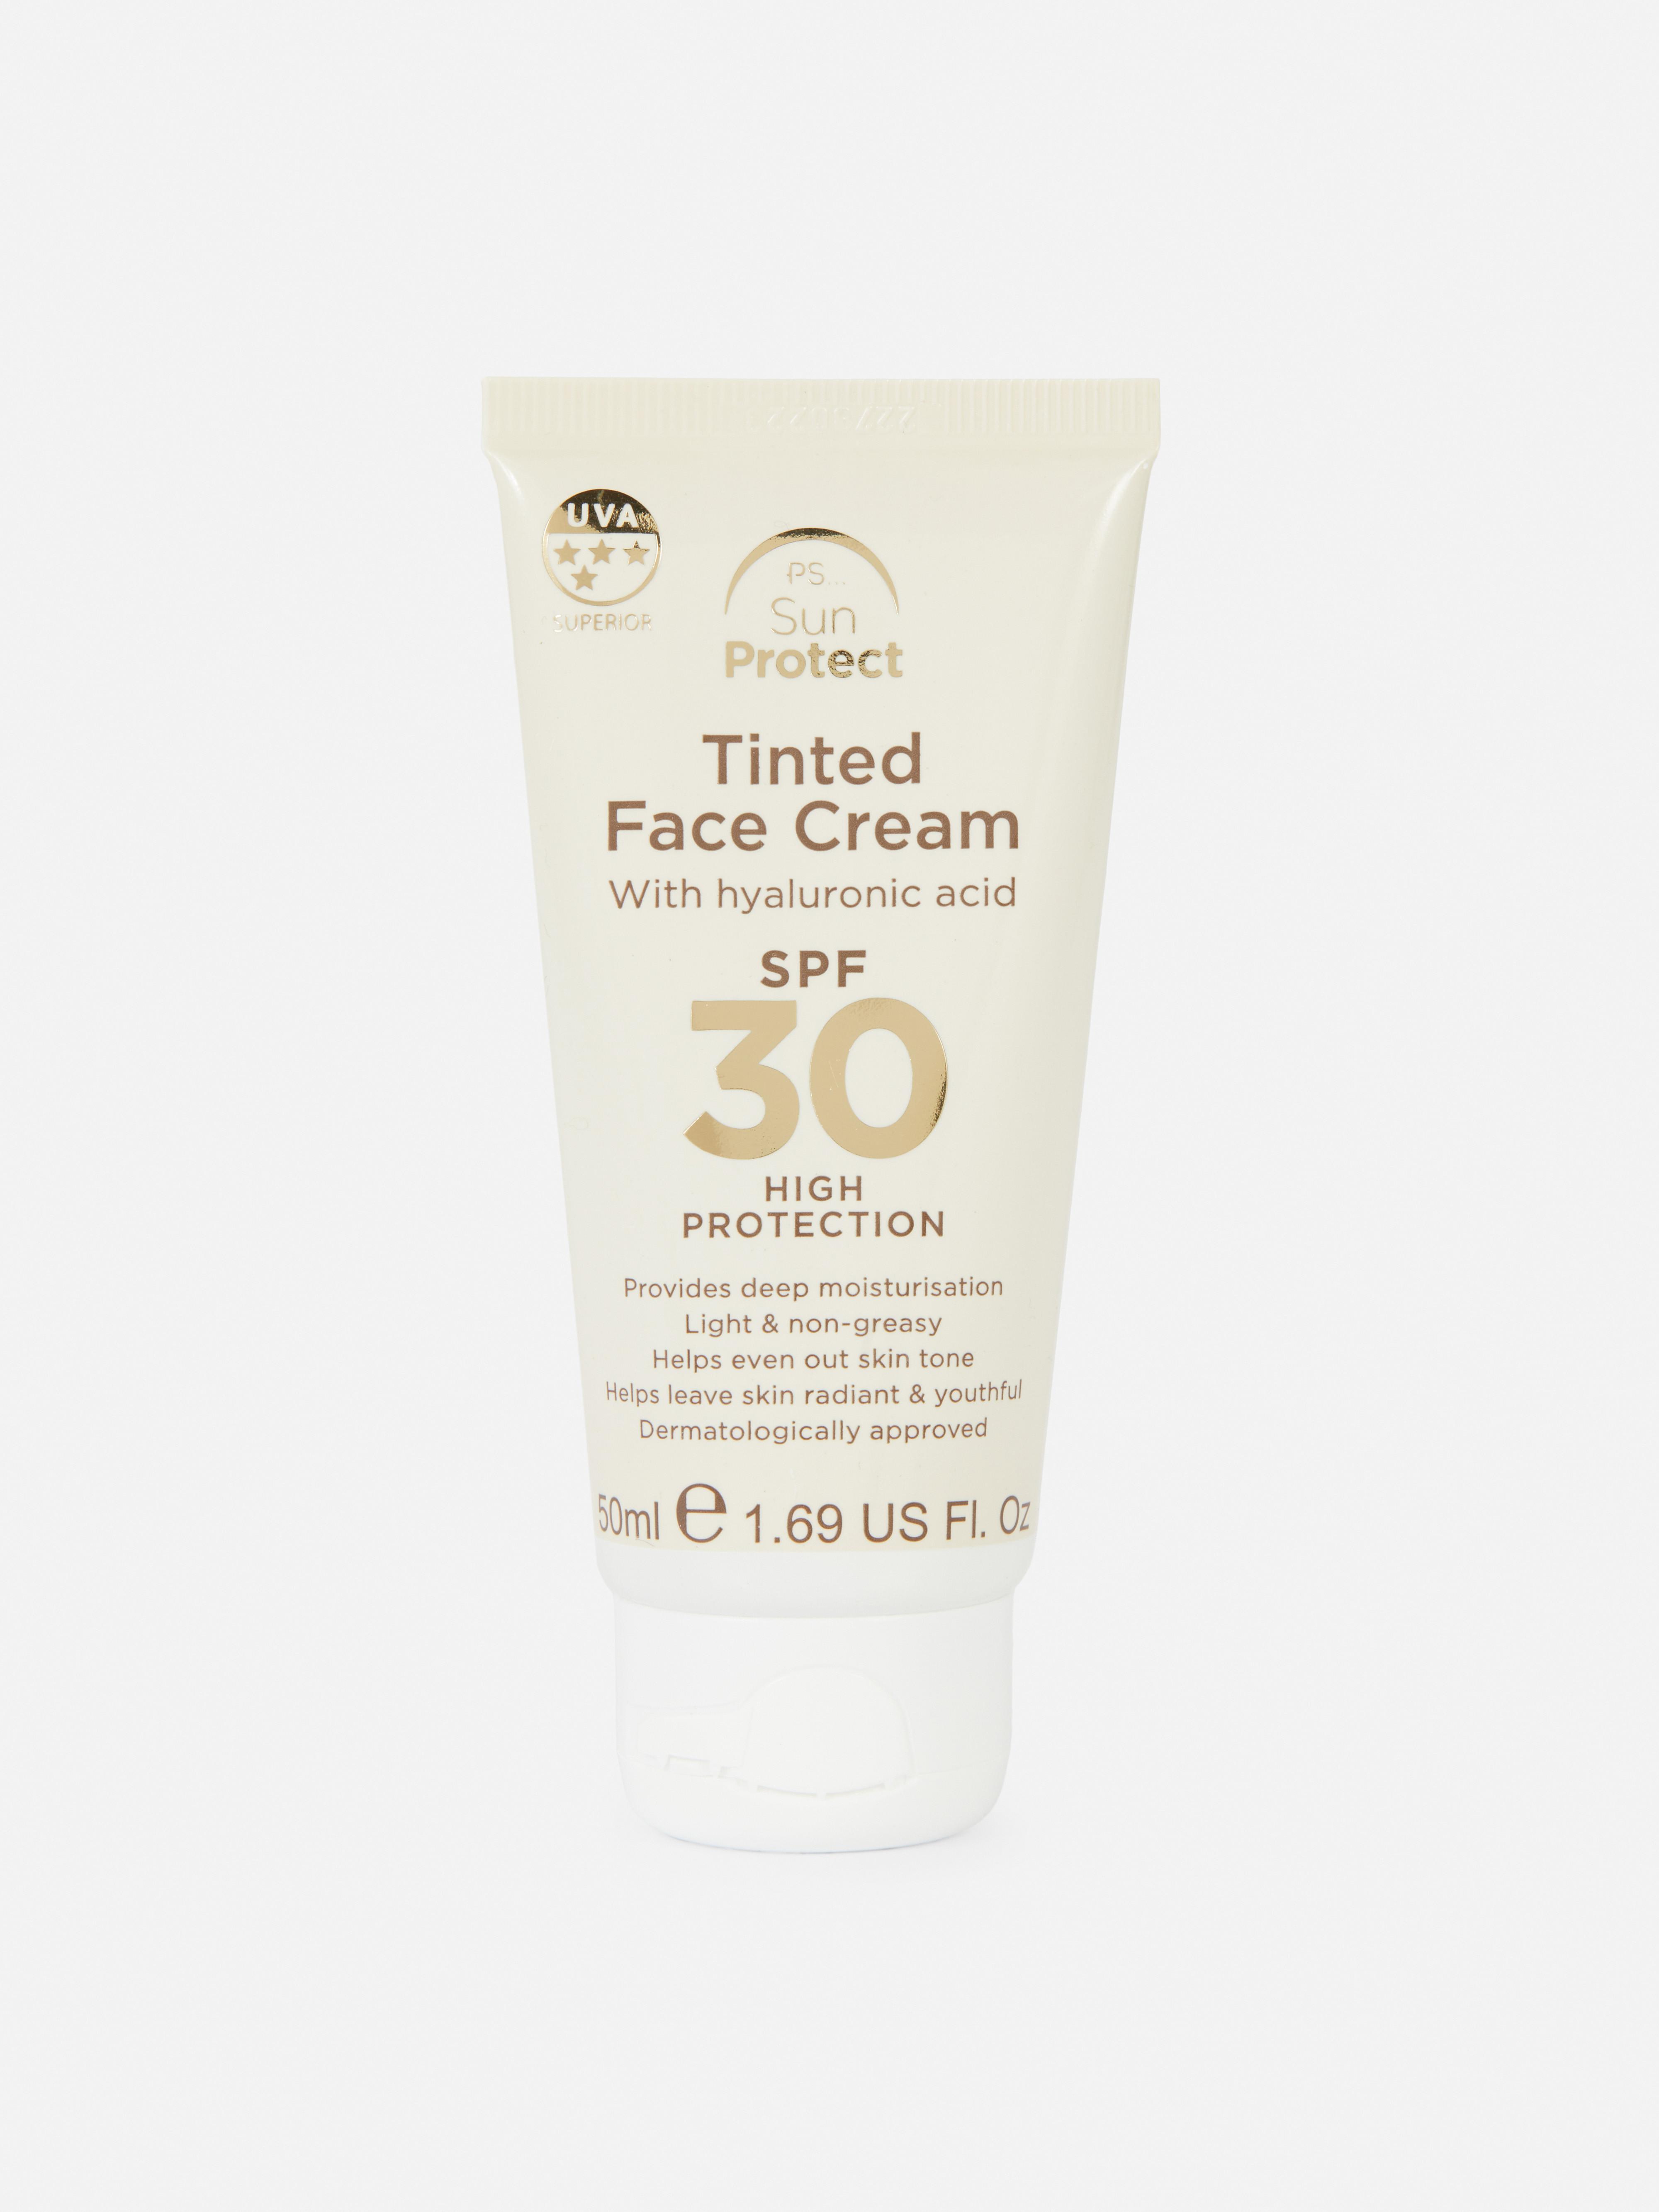 PS... Sun Protect Tinted Face Cream SPF 30